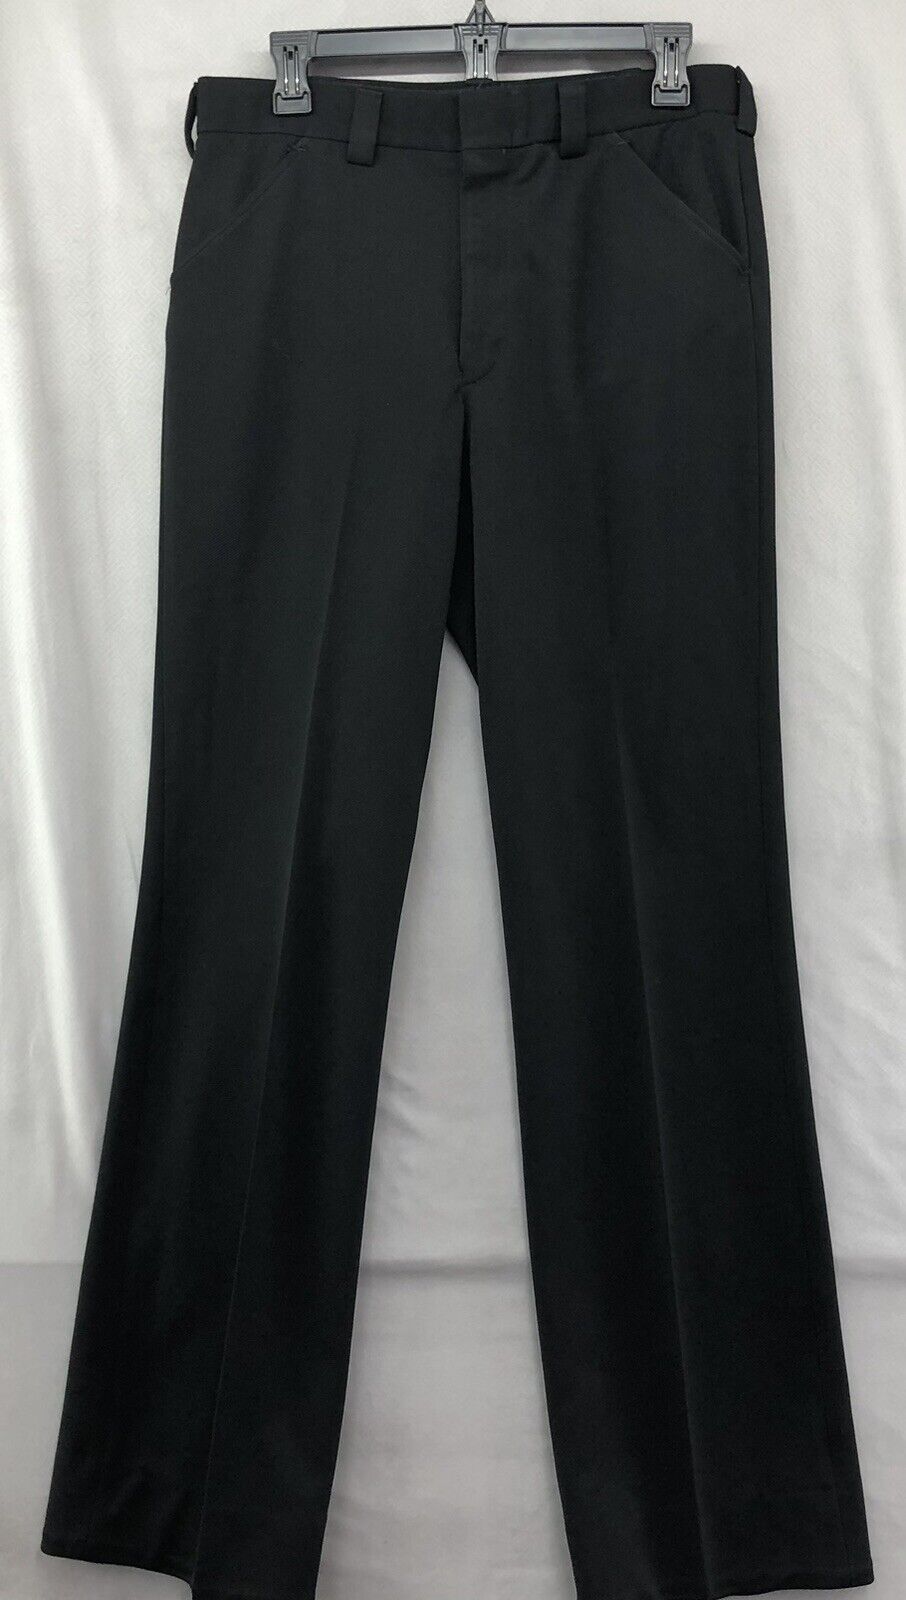 Vintage Creighton Black Straight Leg US Navy Uniform Pants Size 33/34 Mens